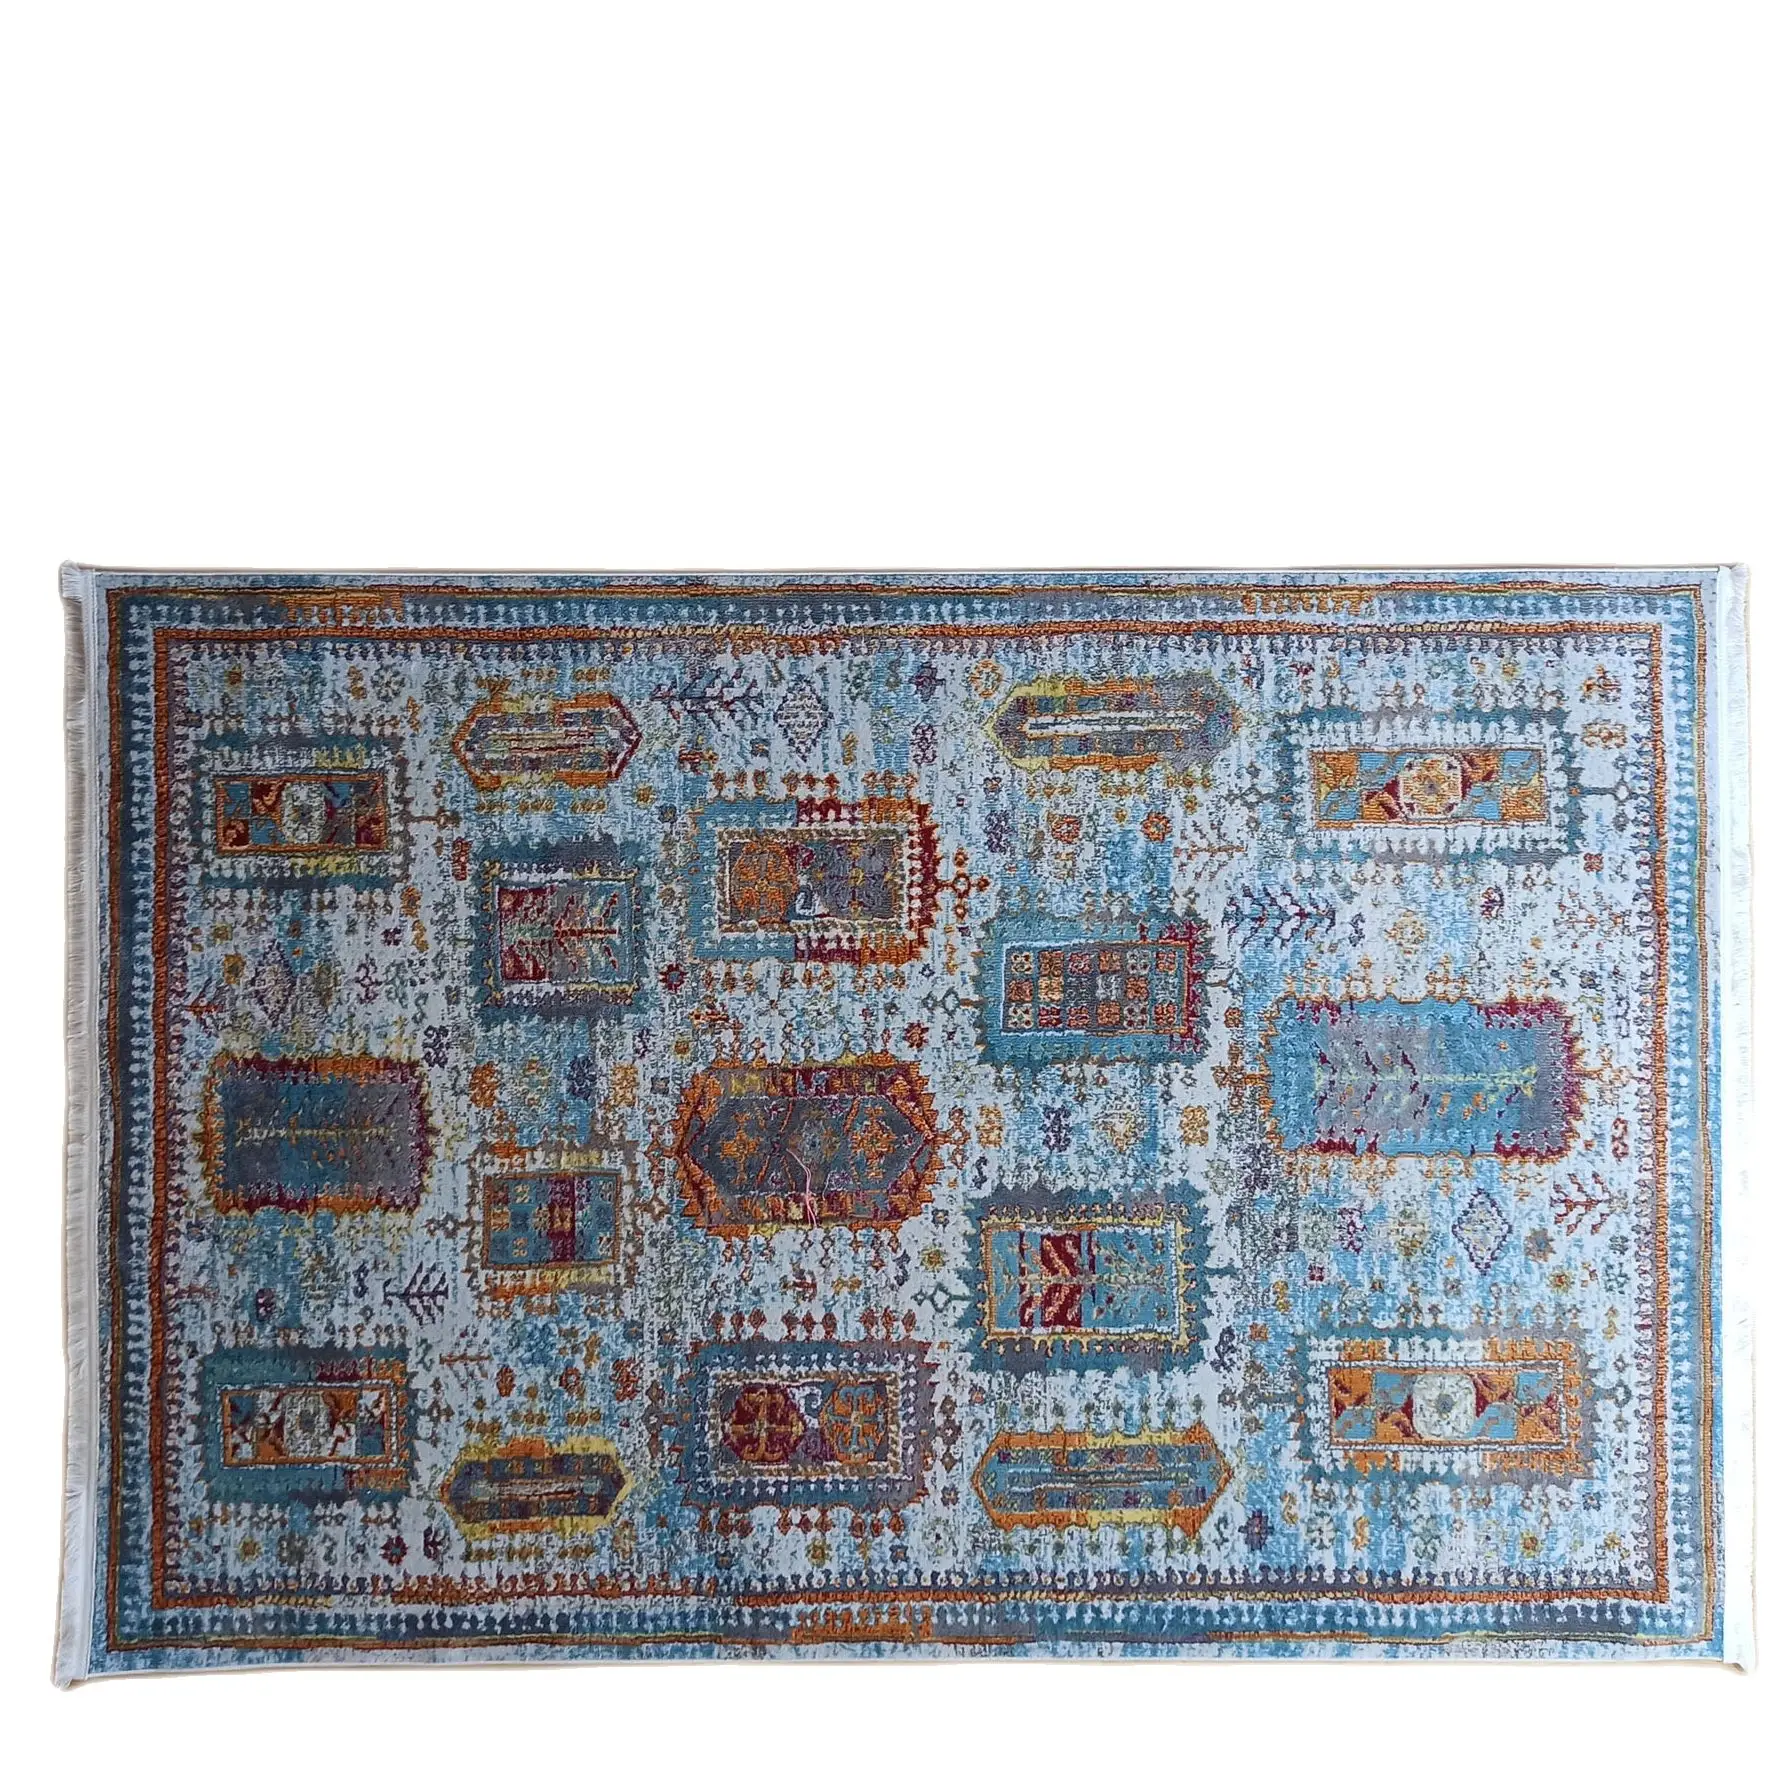 

Turkish Rug, Vintage Blue White Area Rug, Turkish Oushak Rug, Unique Design Rugs, Traditional Geometric Oriental Rugs